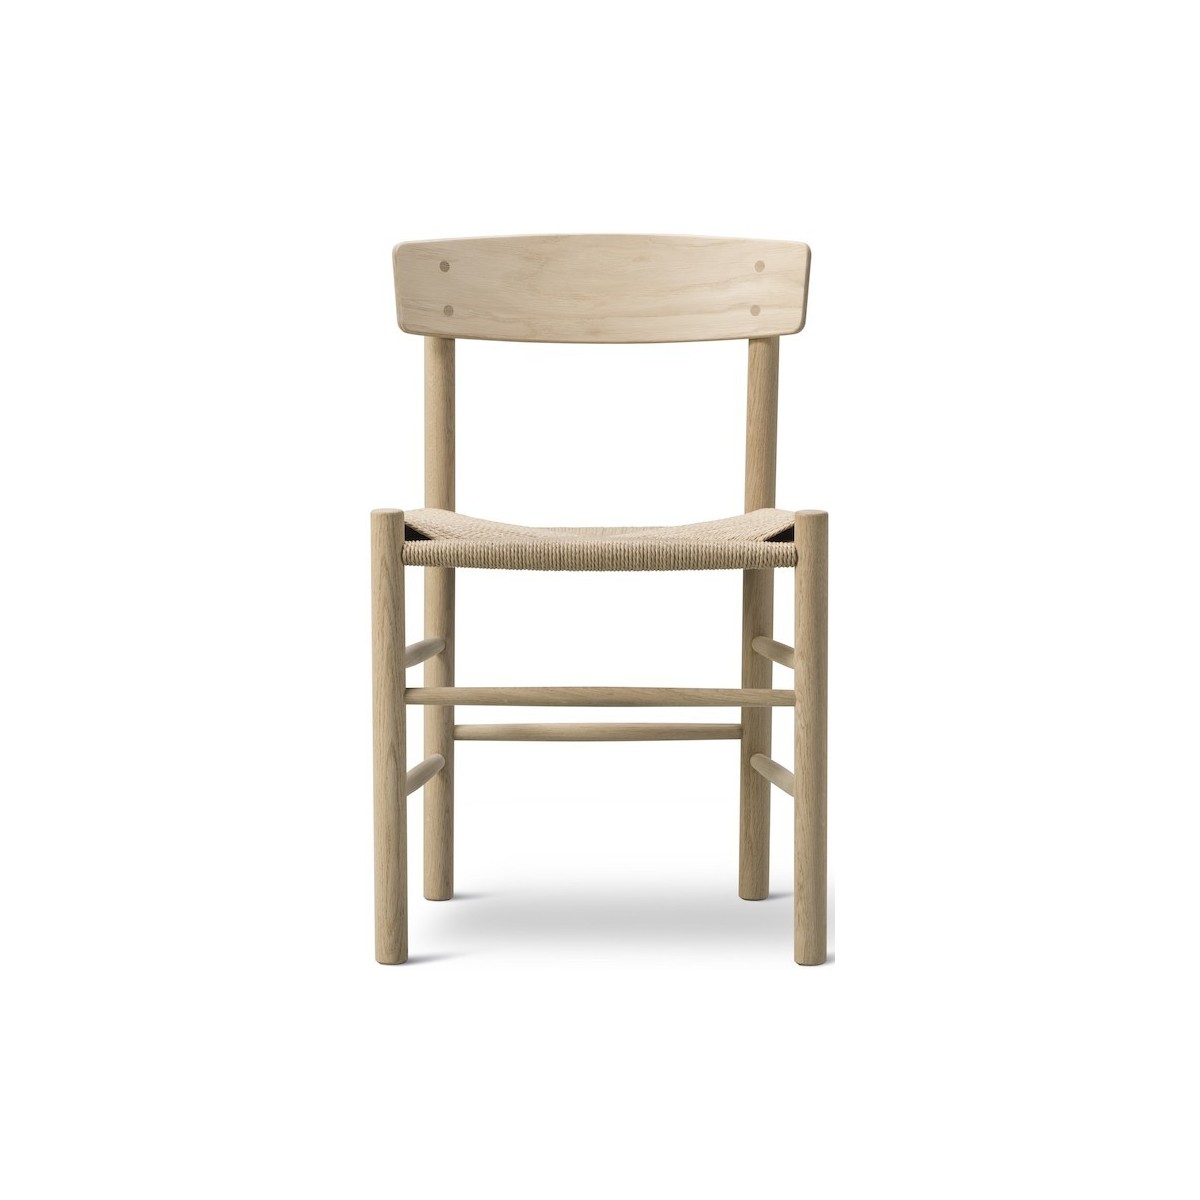 J39 Chair – soaped oak + natural paper cord